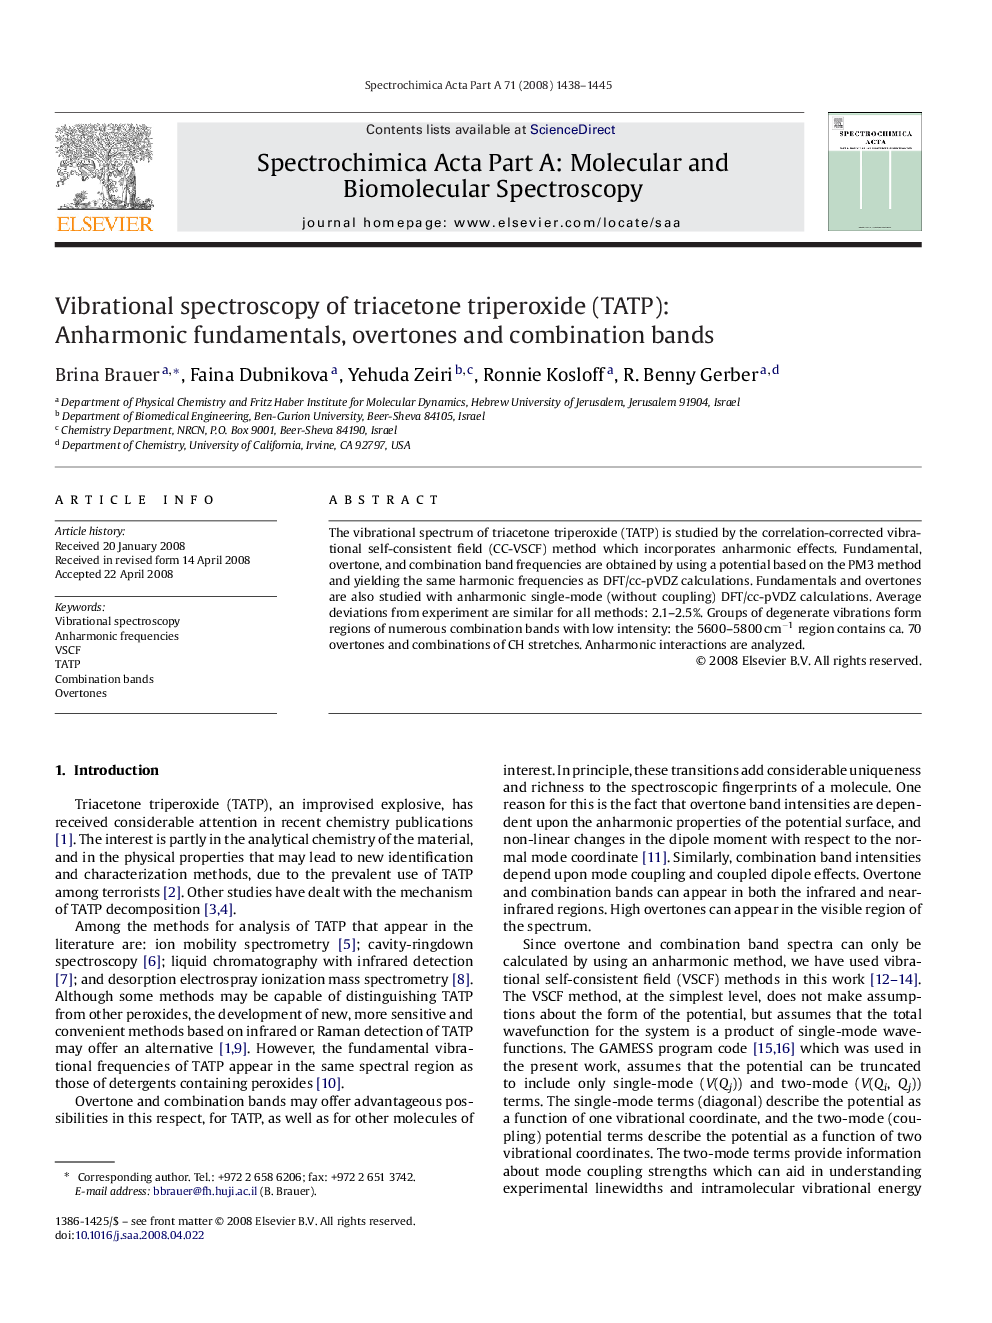 Vibrational spectroscopy of triacetone triperoxide (TATP): Anharmonic fundamentals, overtones and combination bands